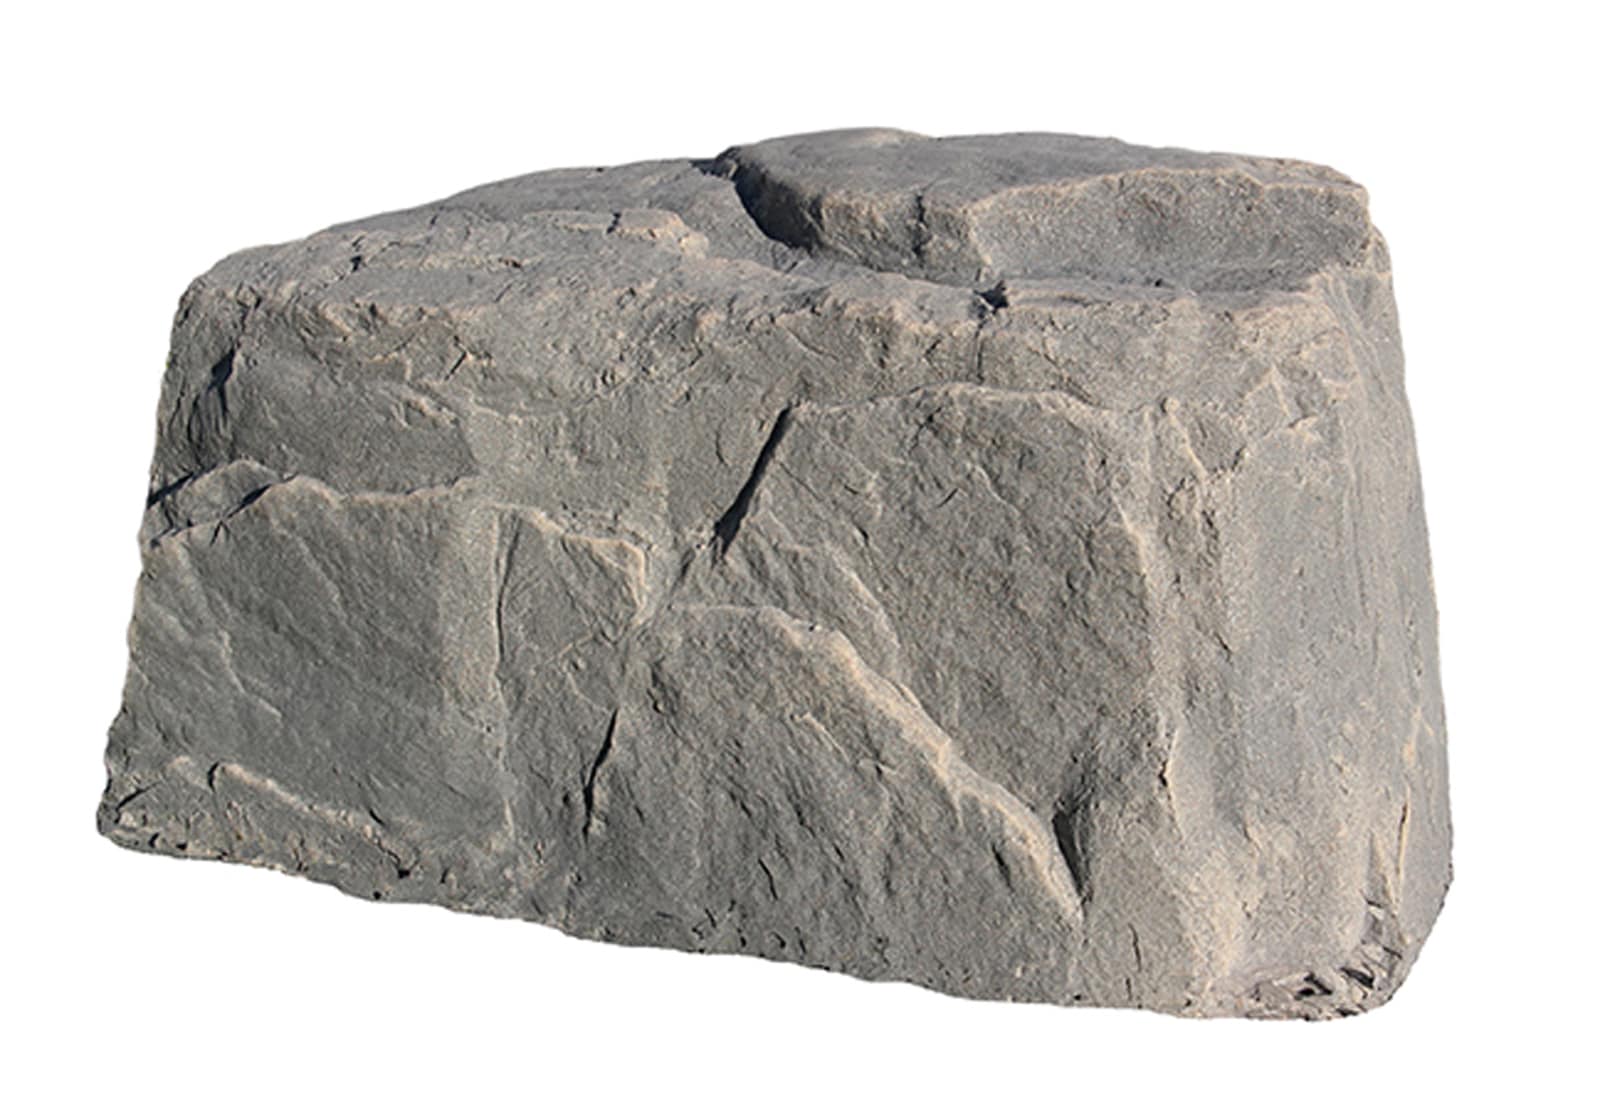 Dekorra Large Fake Rock to Cover Manholes - Bed Bath & Beyond - 11649933